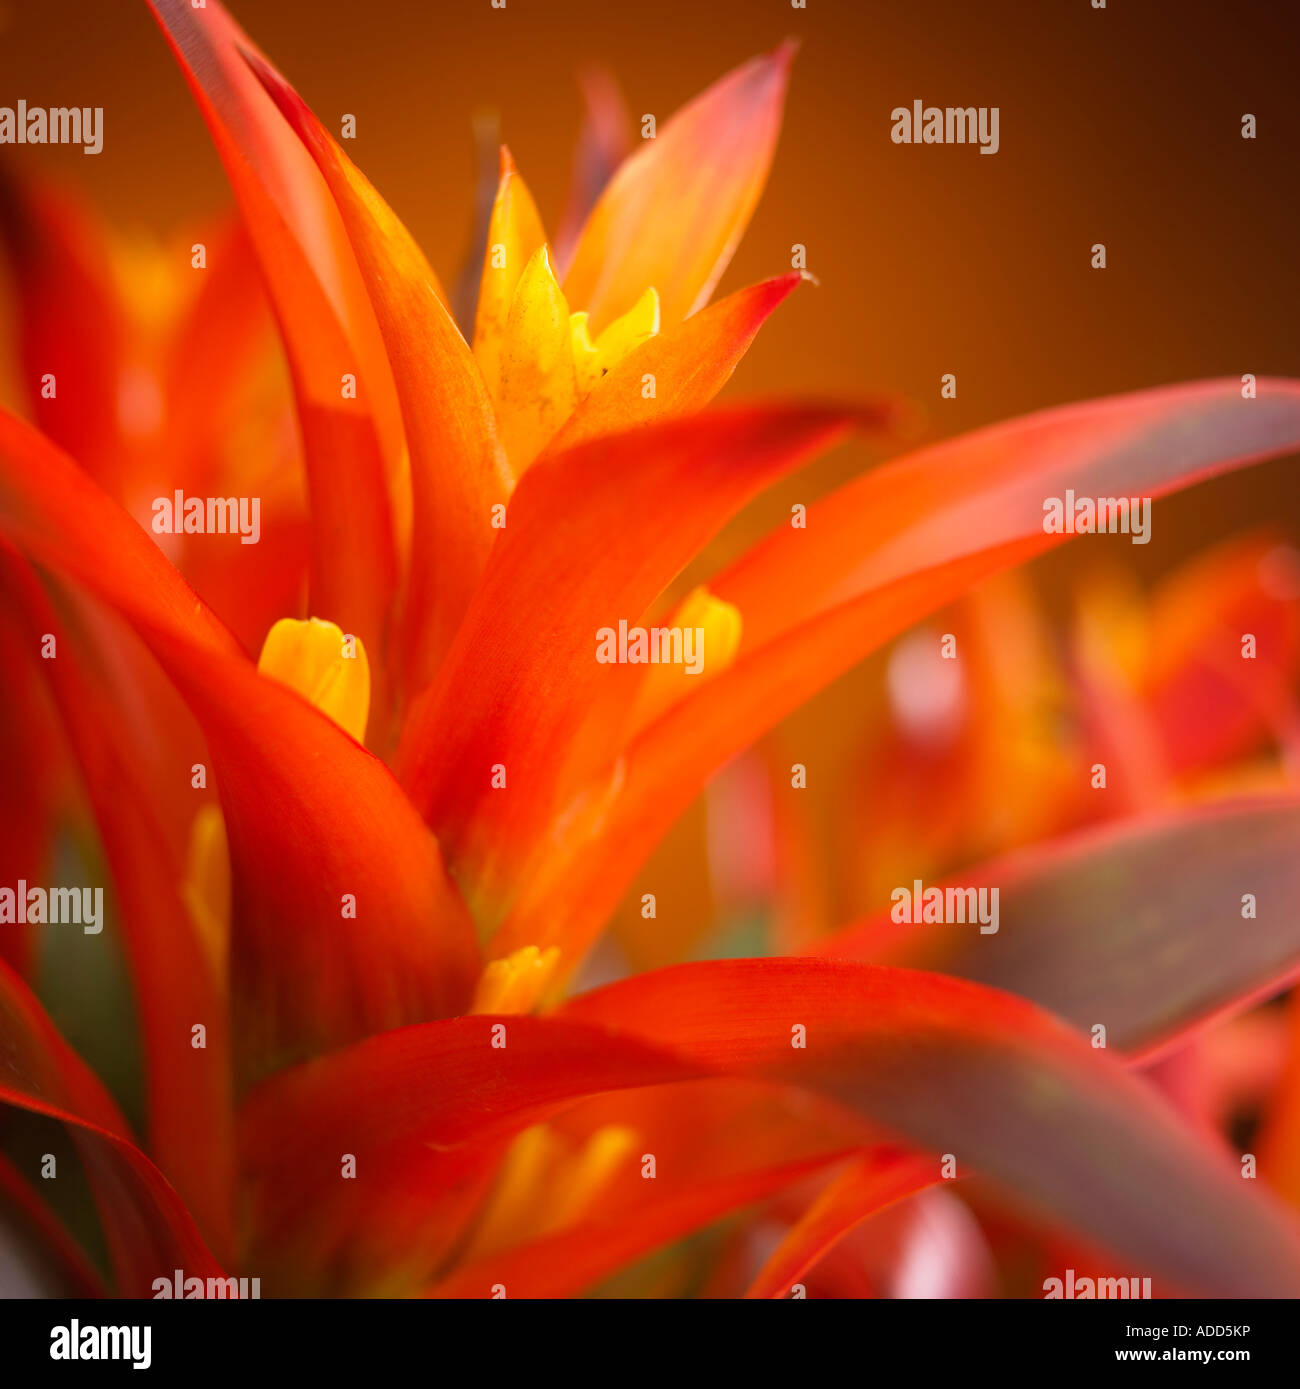 guzmania flower on orange background Stock Photo